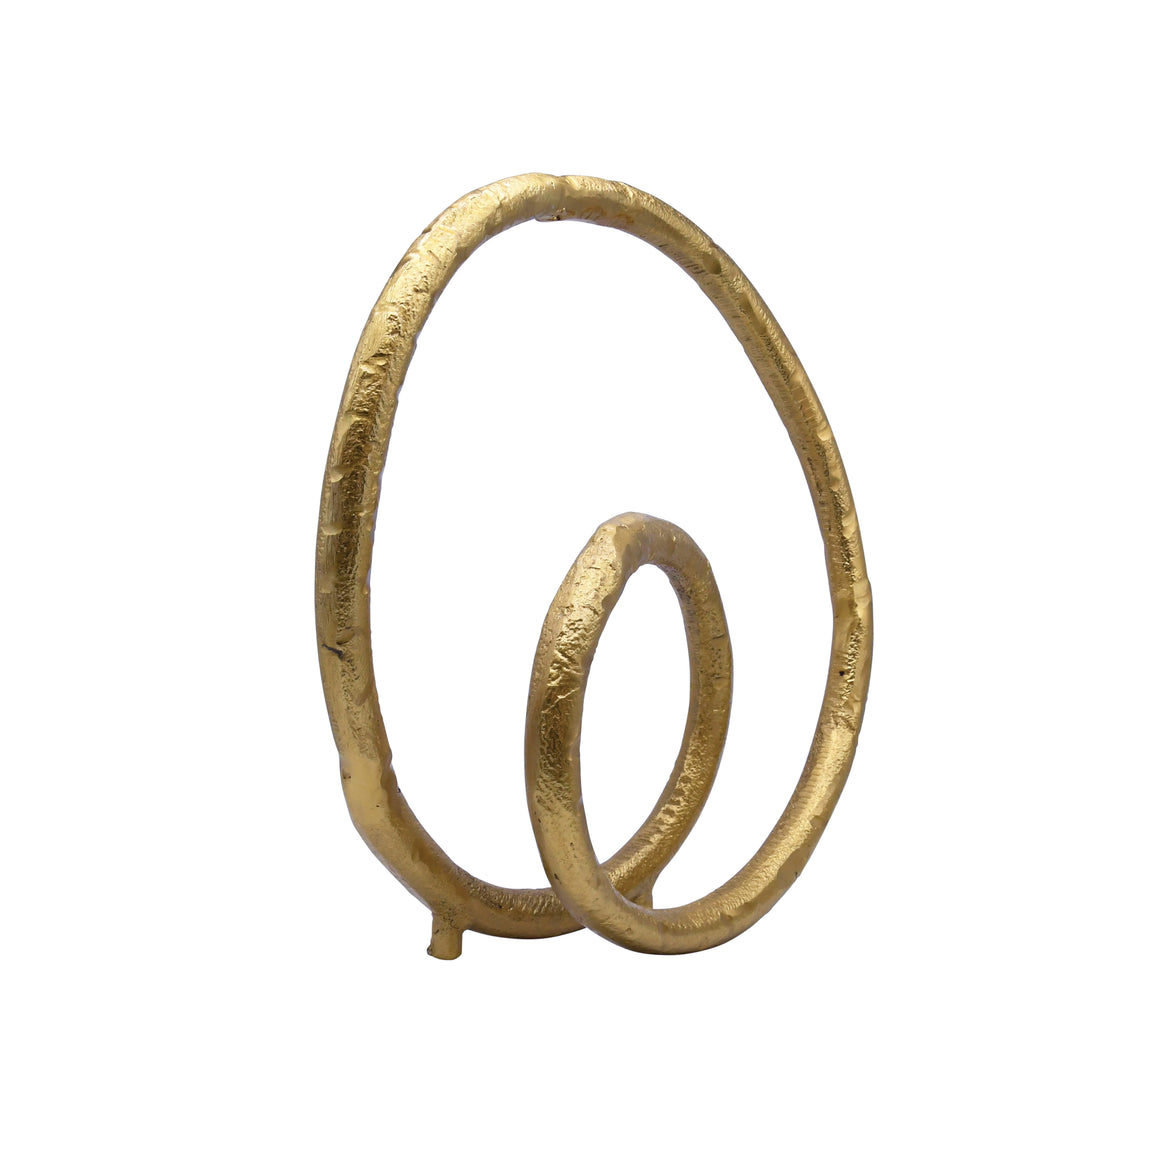 Rounded Metal Loop Sculpture in Textured Brass